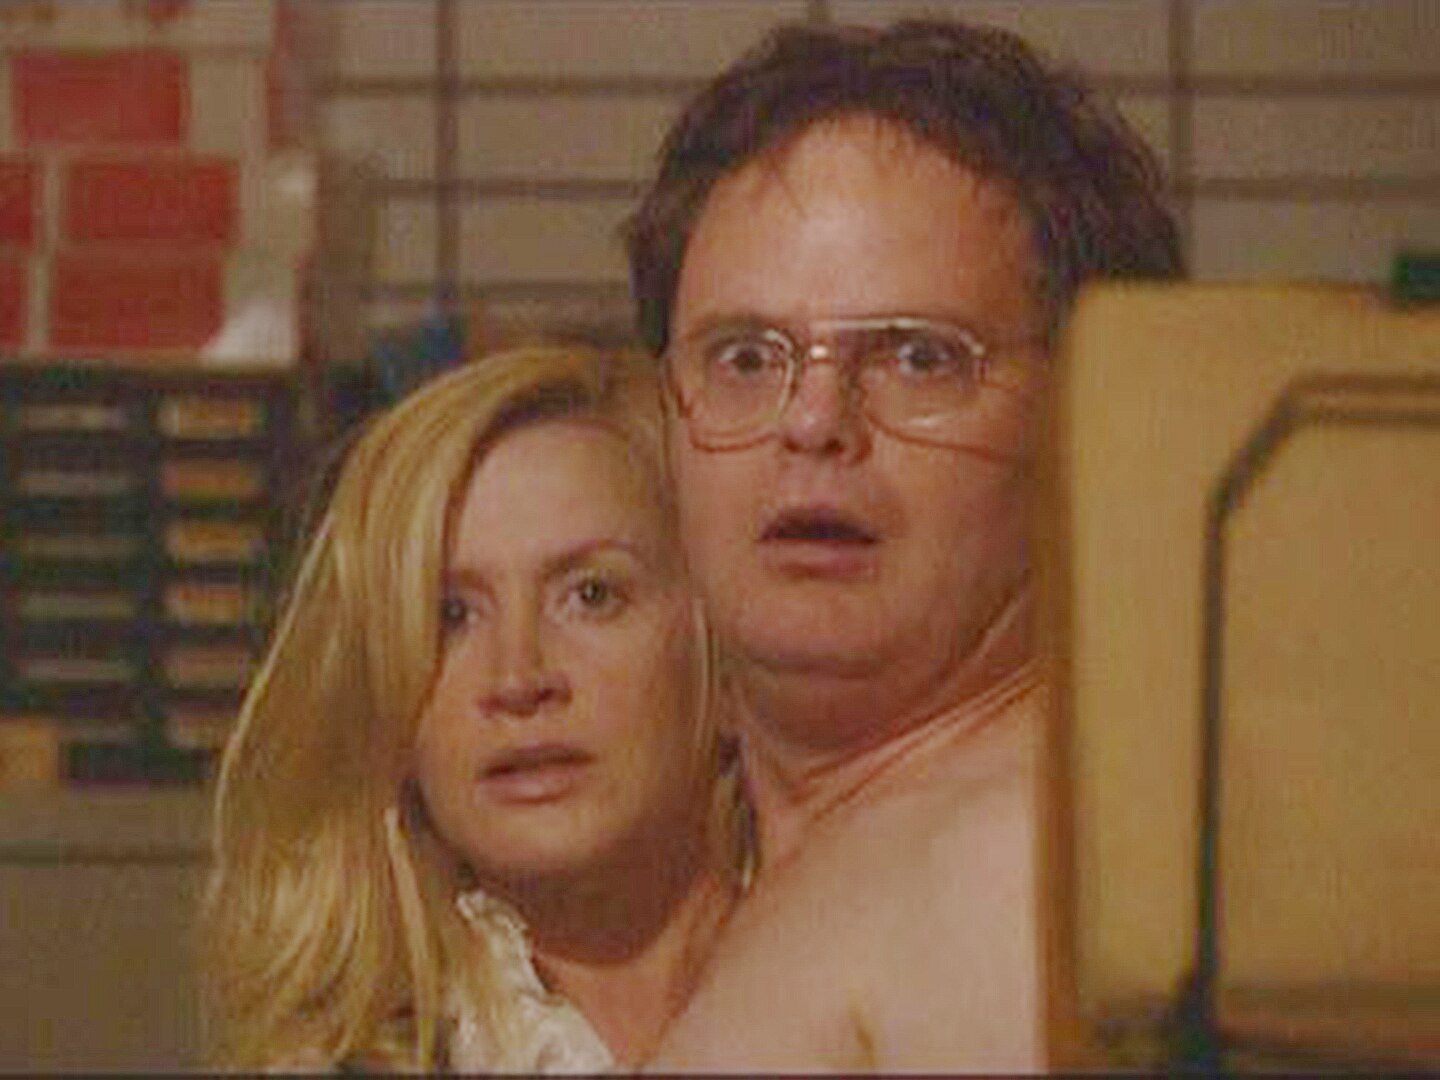 Dwight and angela sex scene